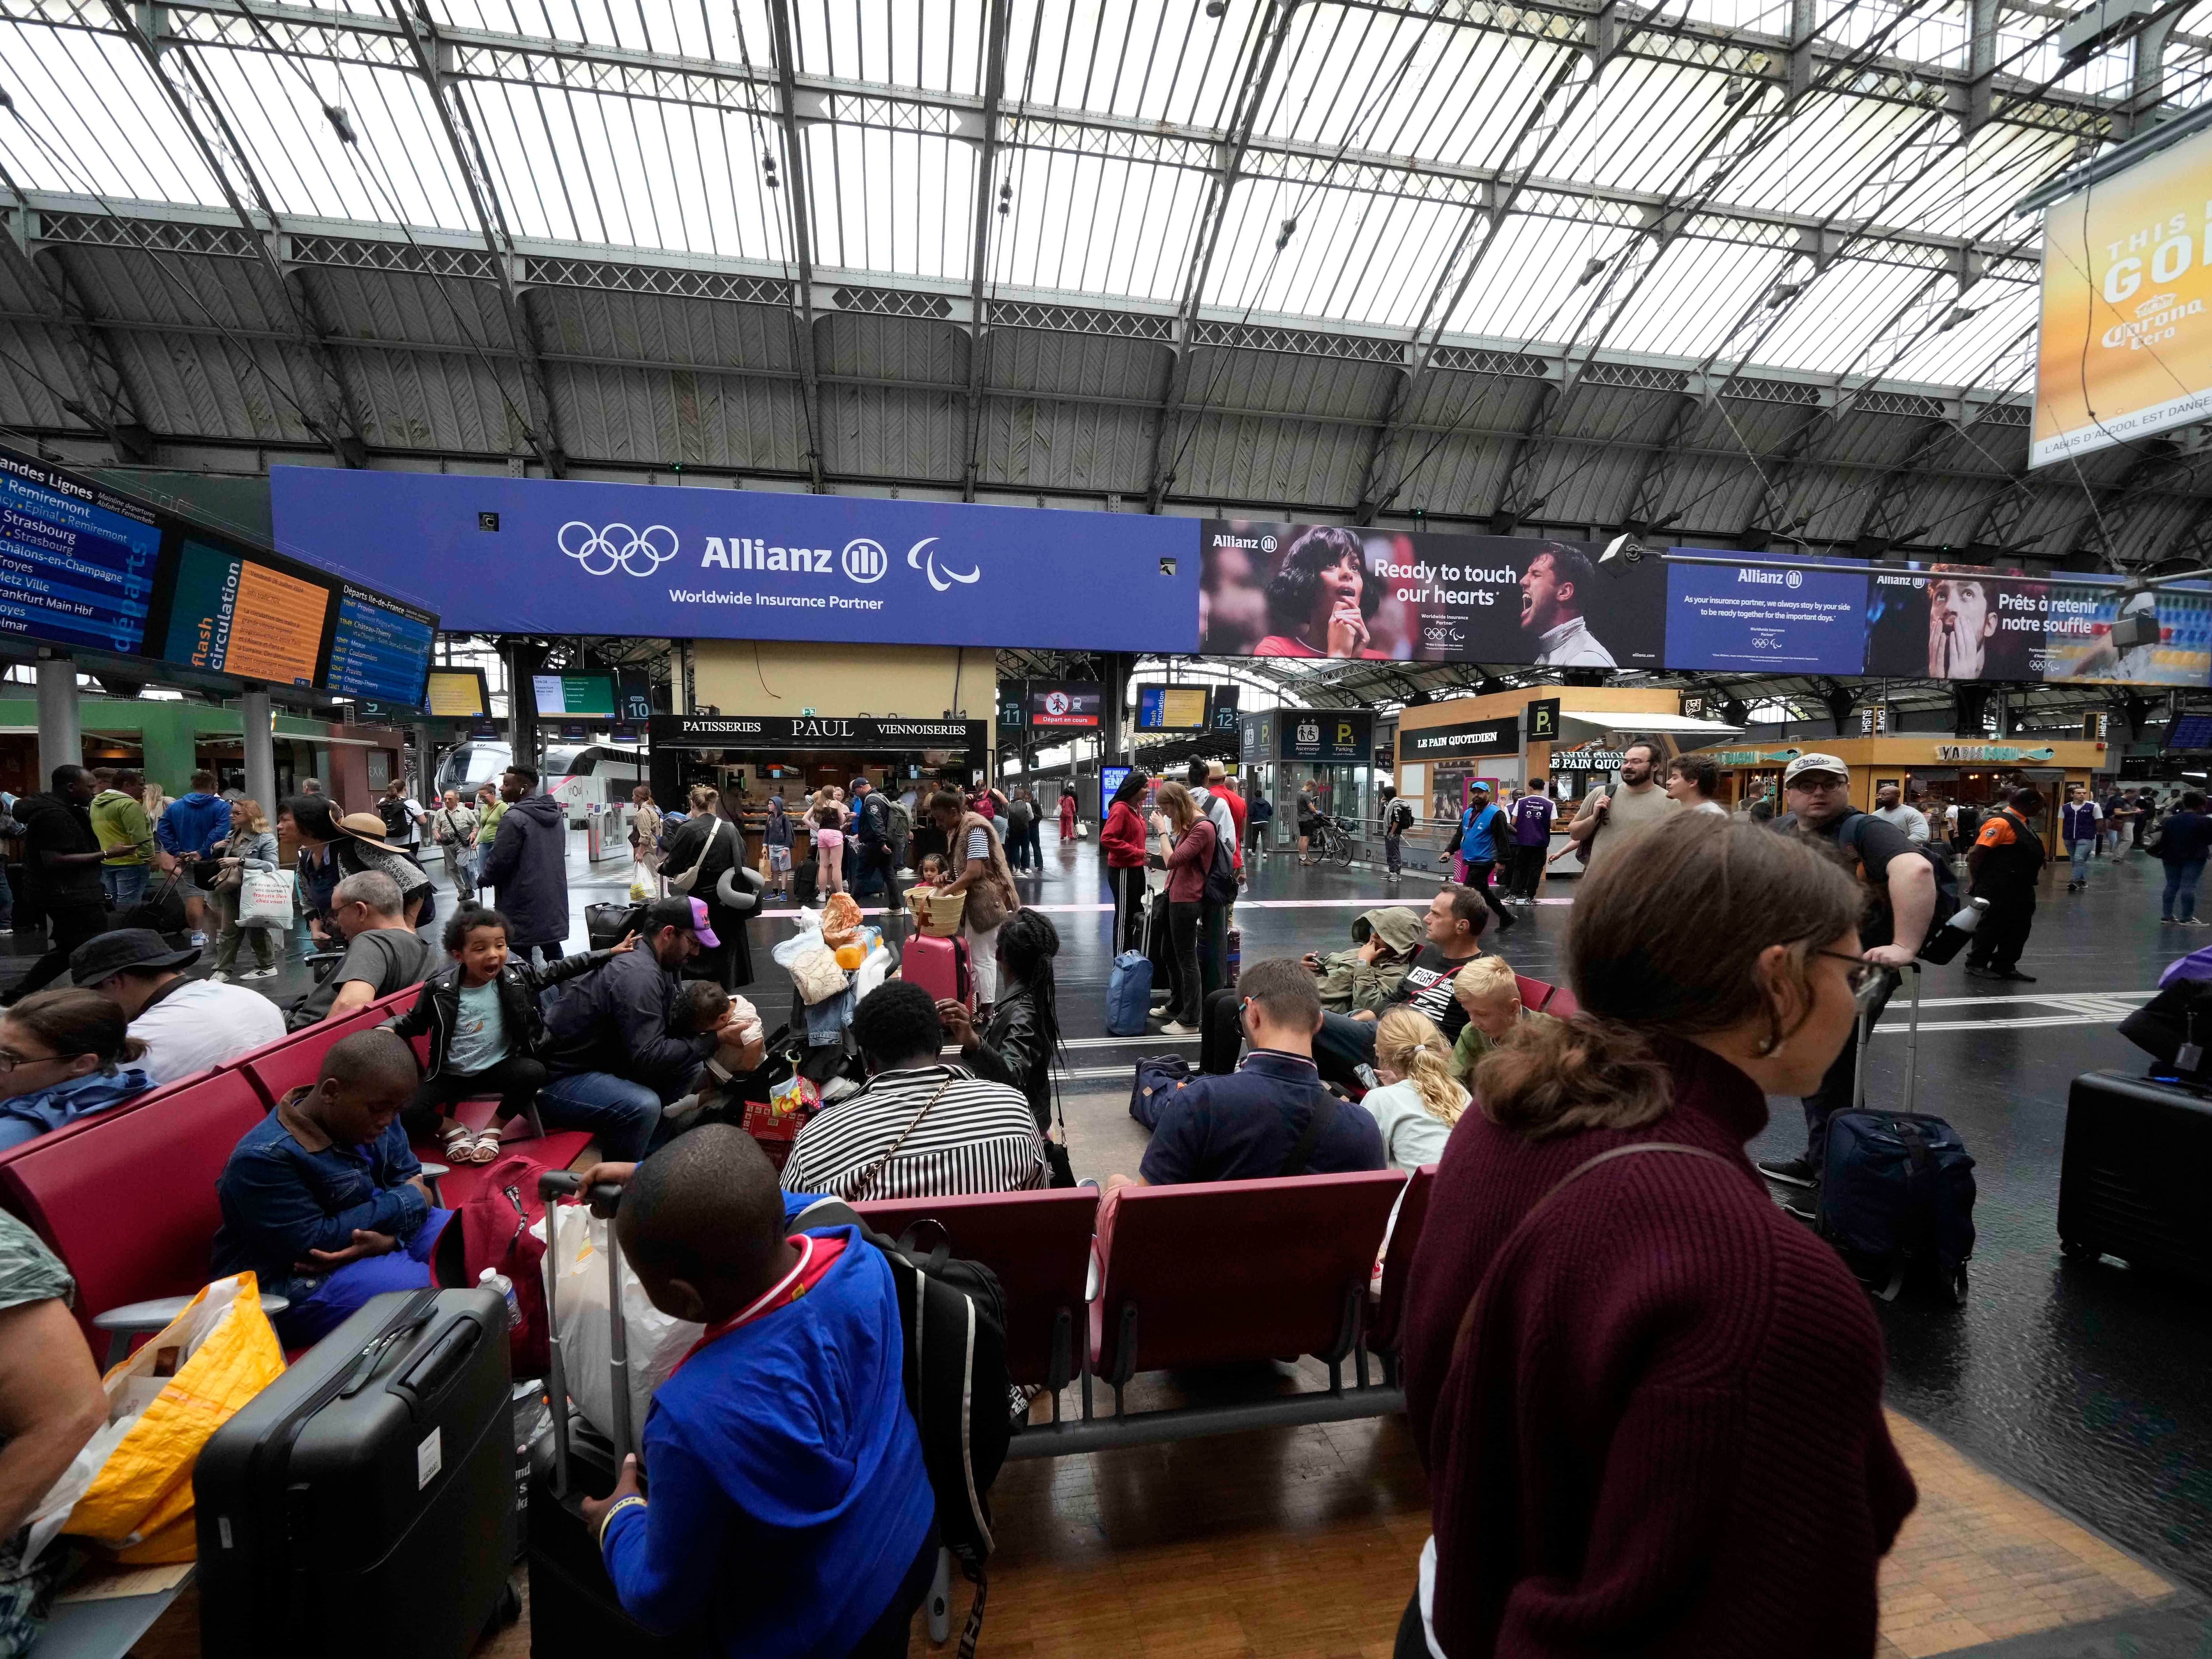 Rail arson attacks aimed at blocking trains to Paris Games, says PM